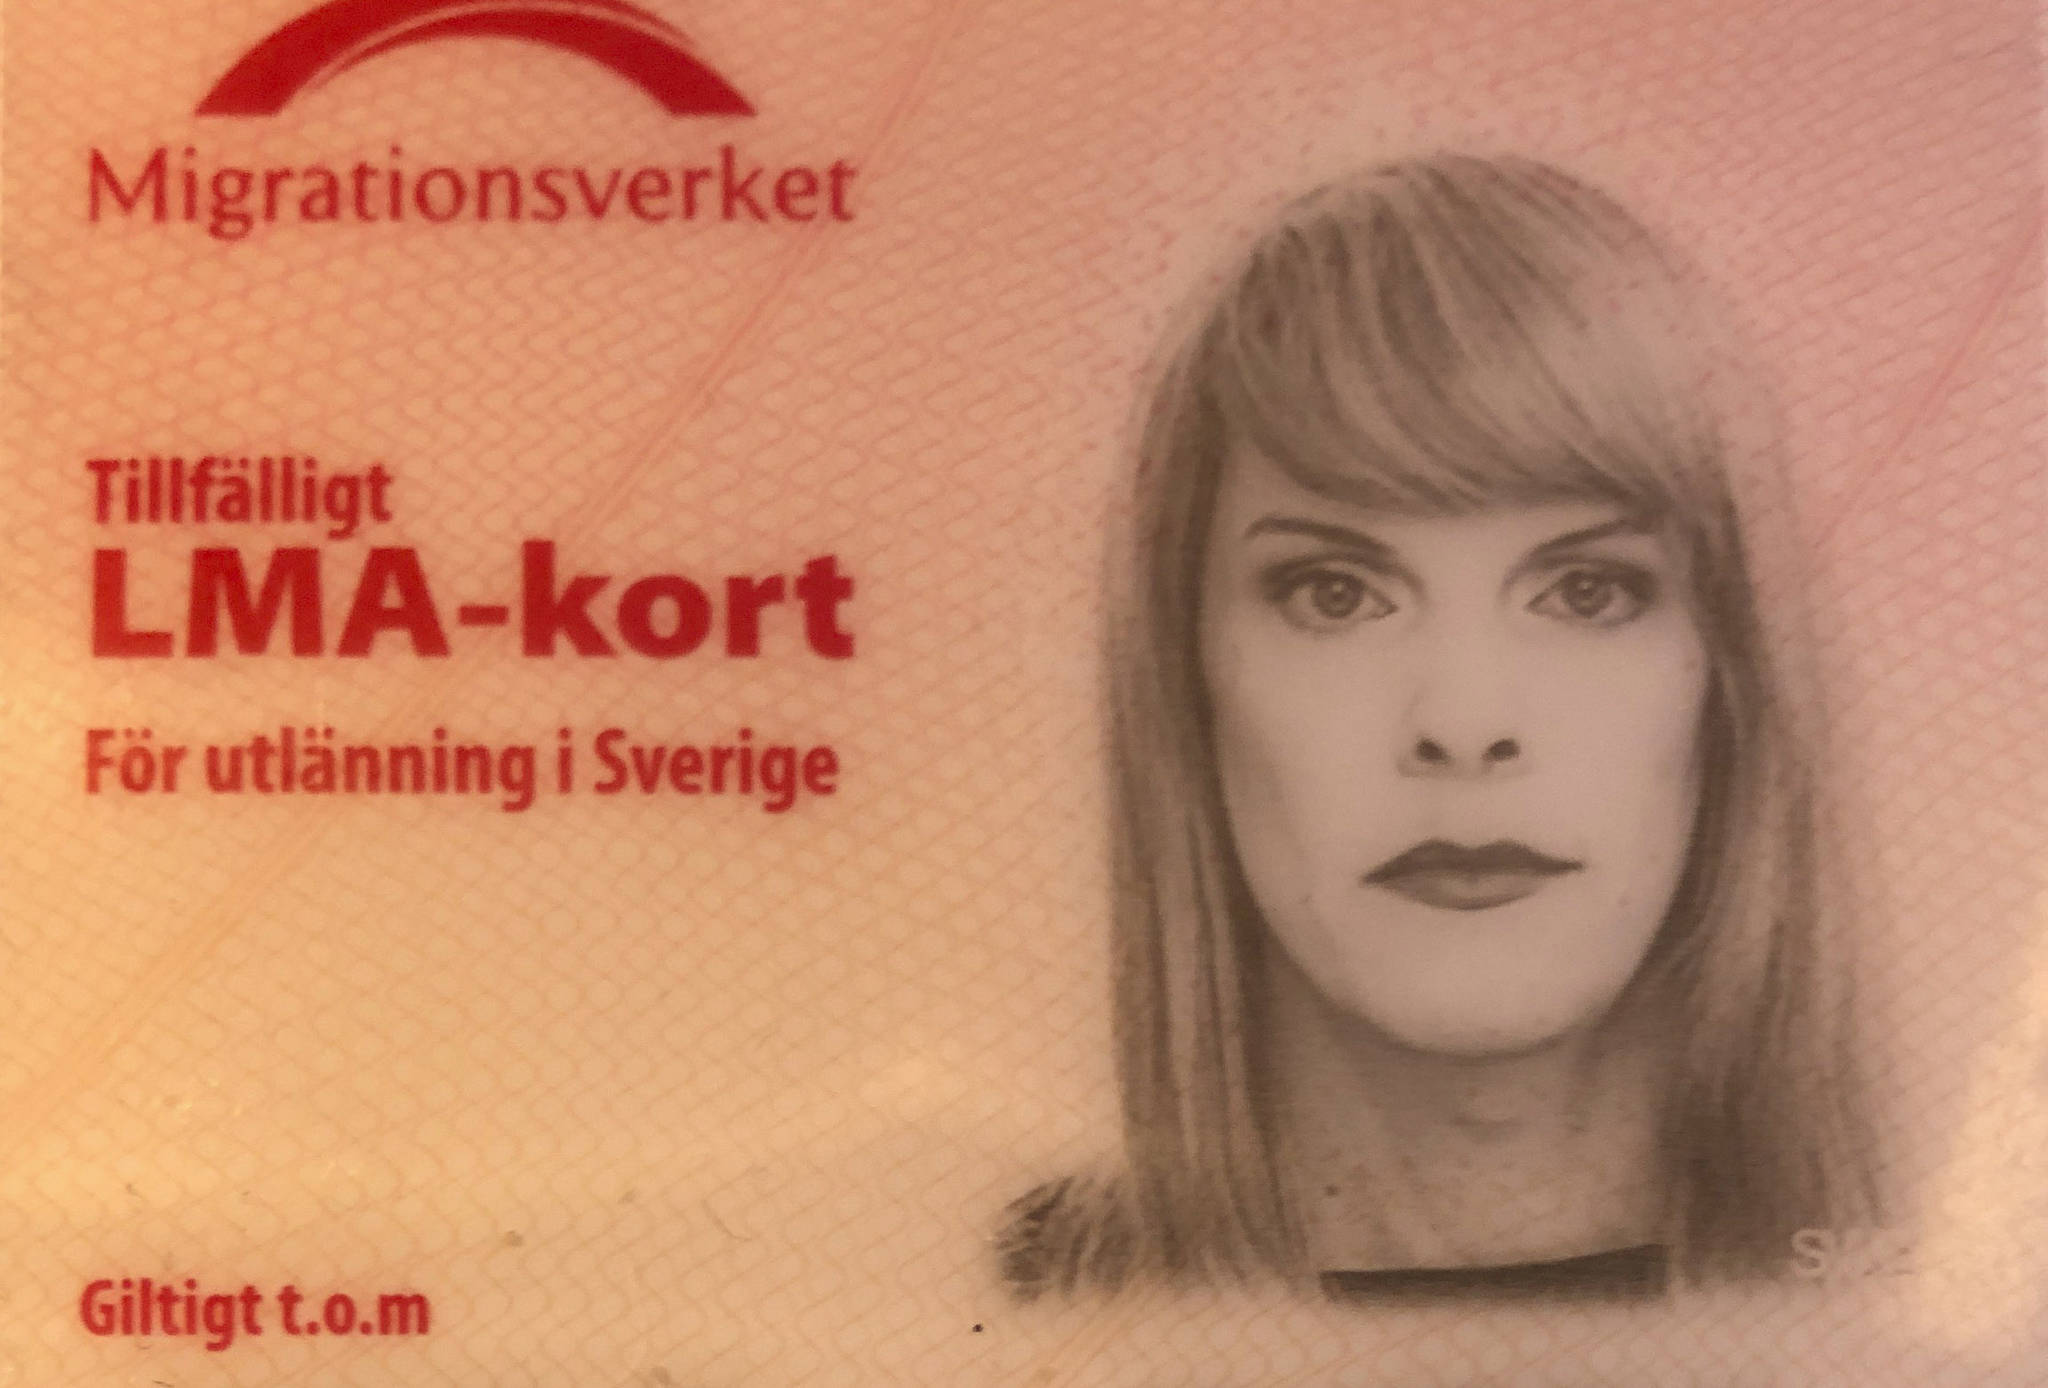 Danni Askini’s Swedish asylum seeker card. Courtesy of Danni Askini